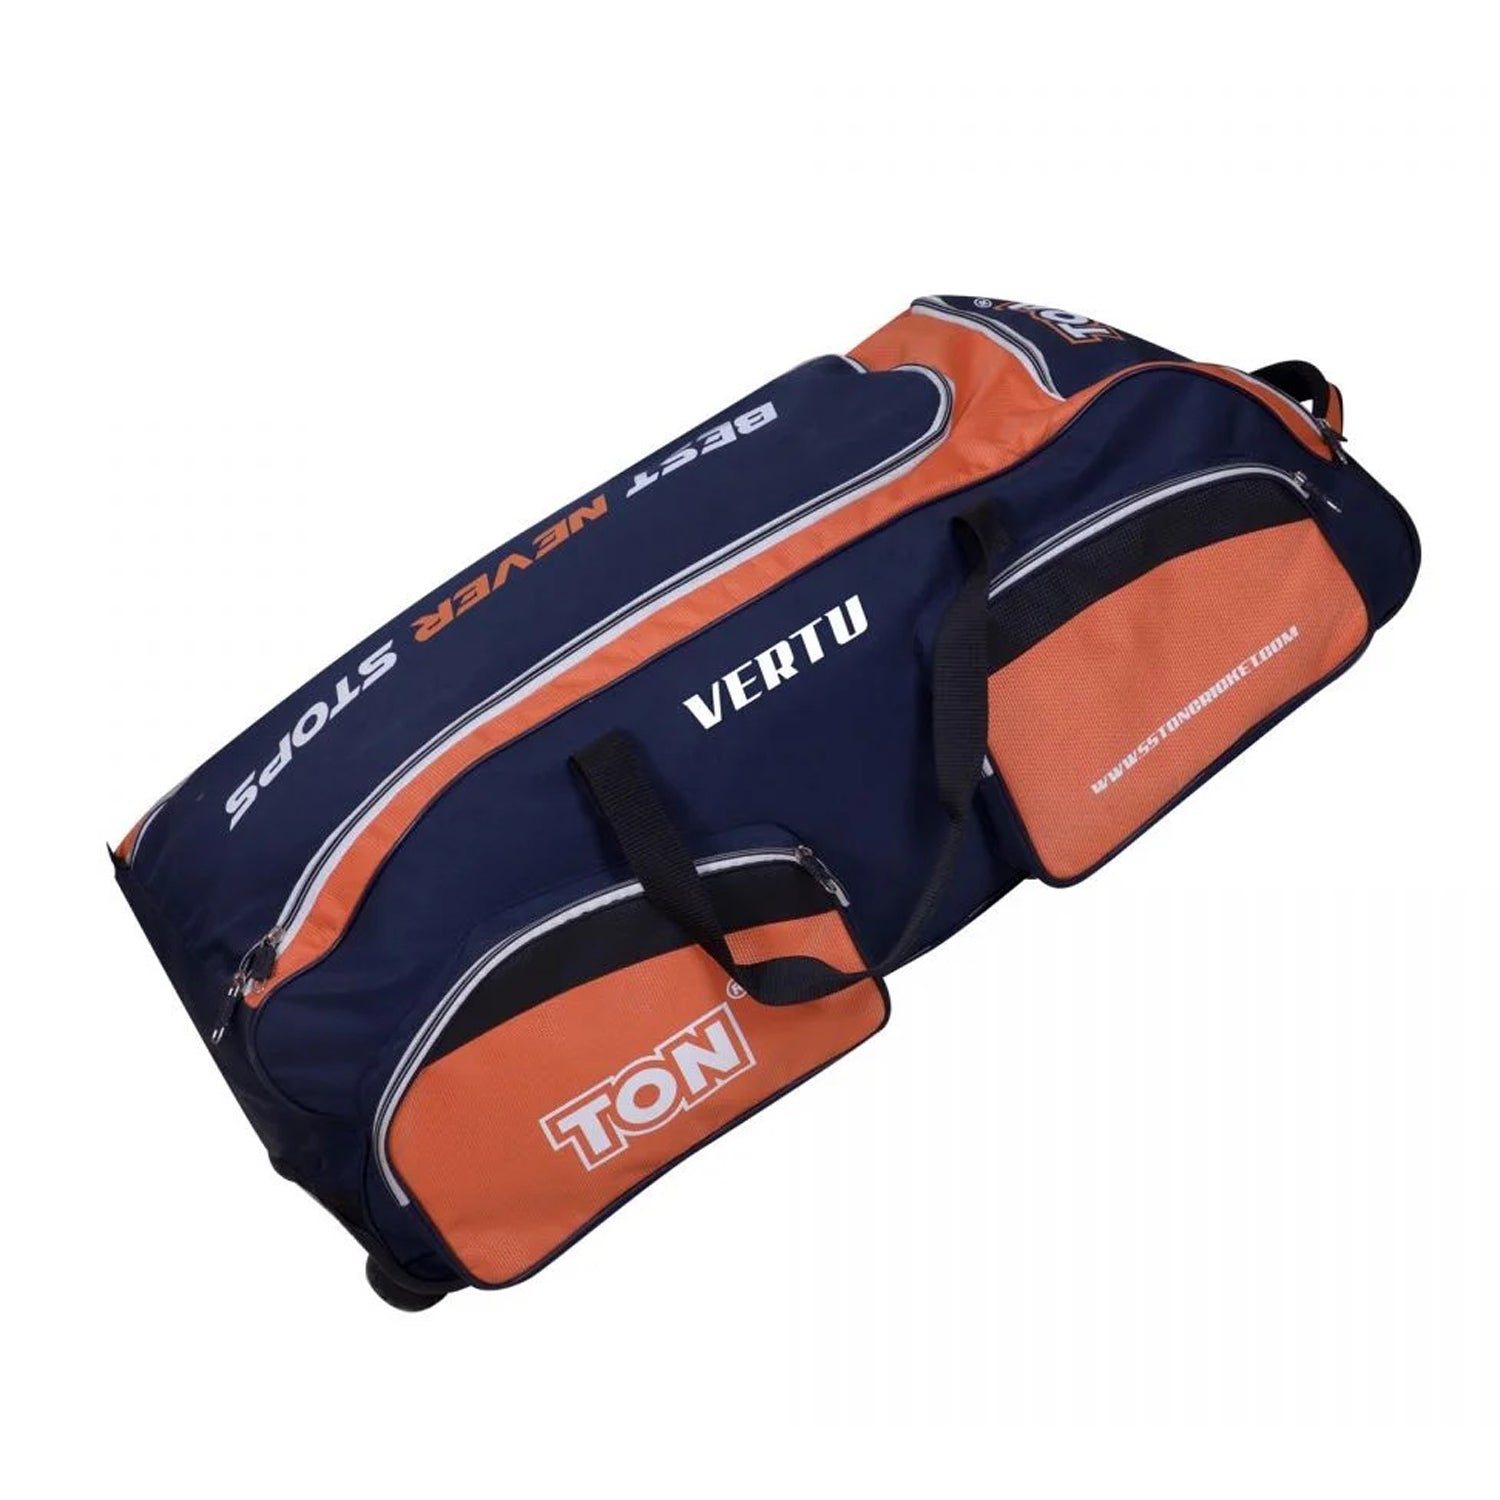 SS Ton Vertu Wheels Cricket Kit Bag - Best Price online Prokicksports.com